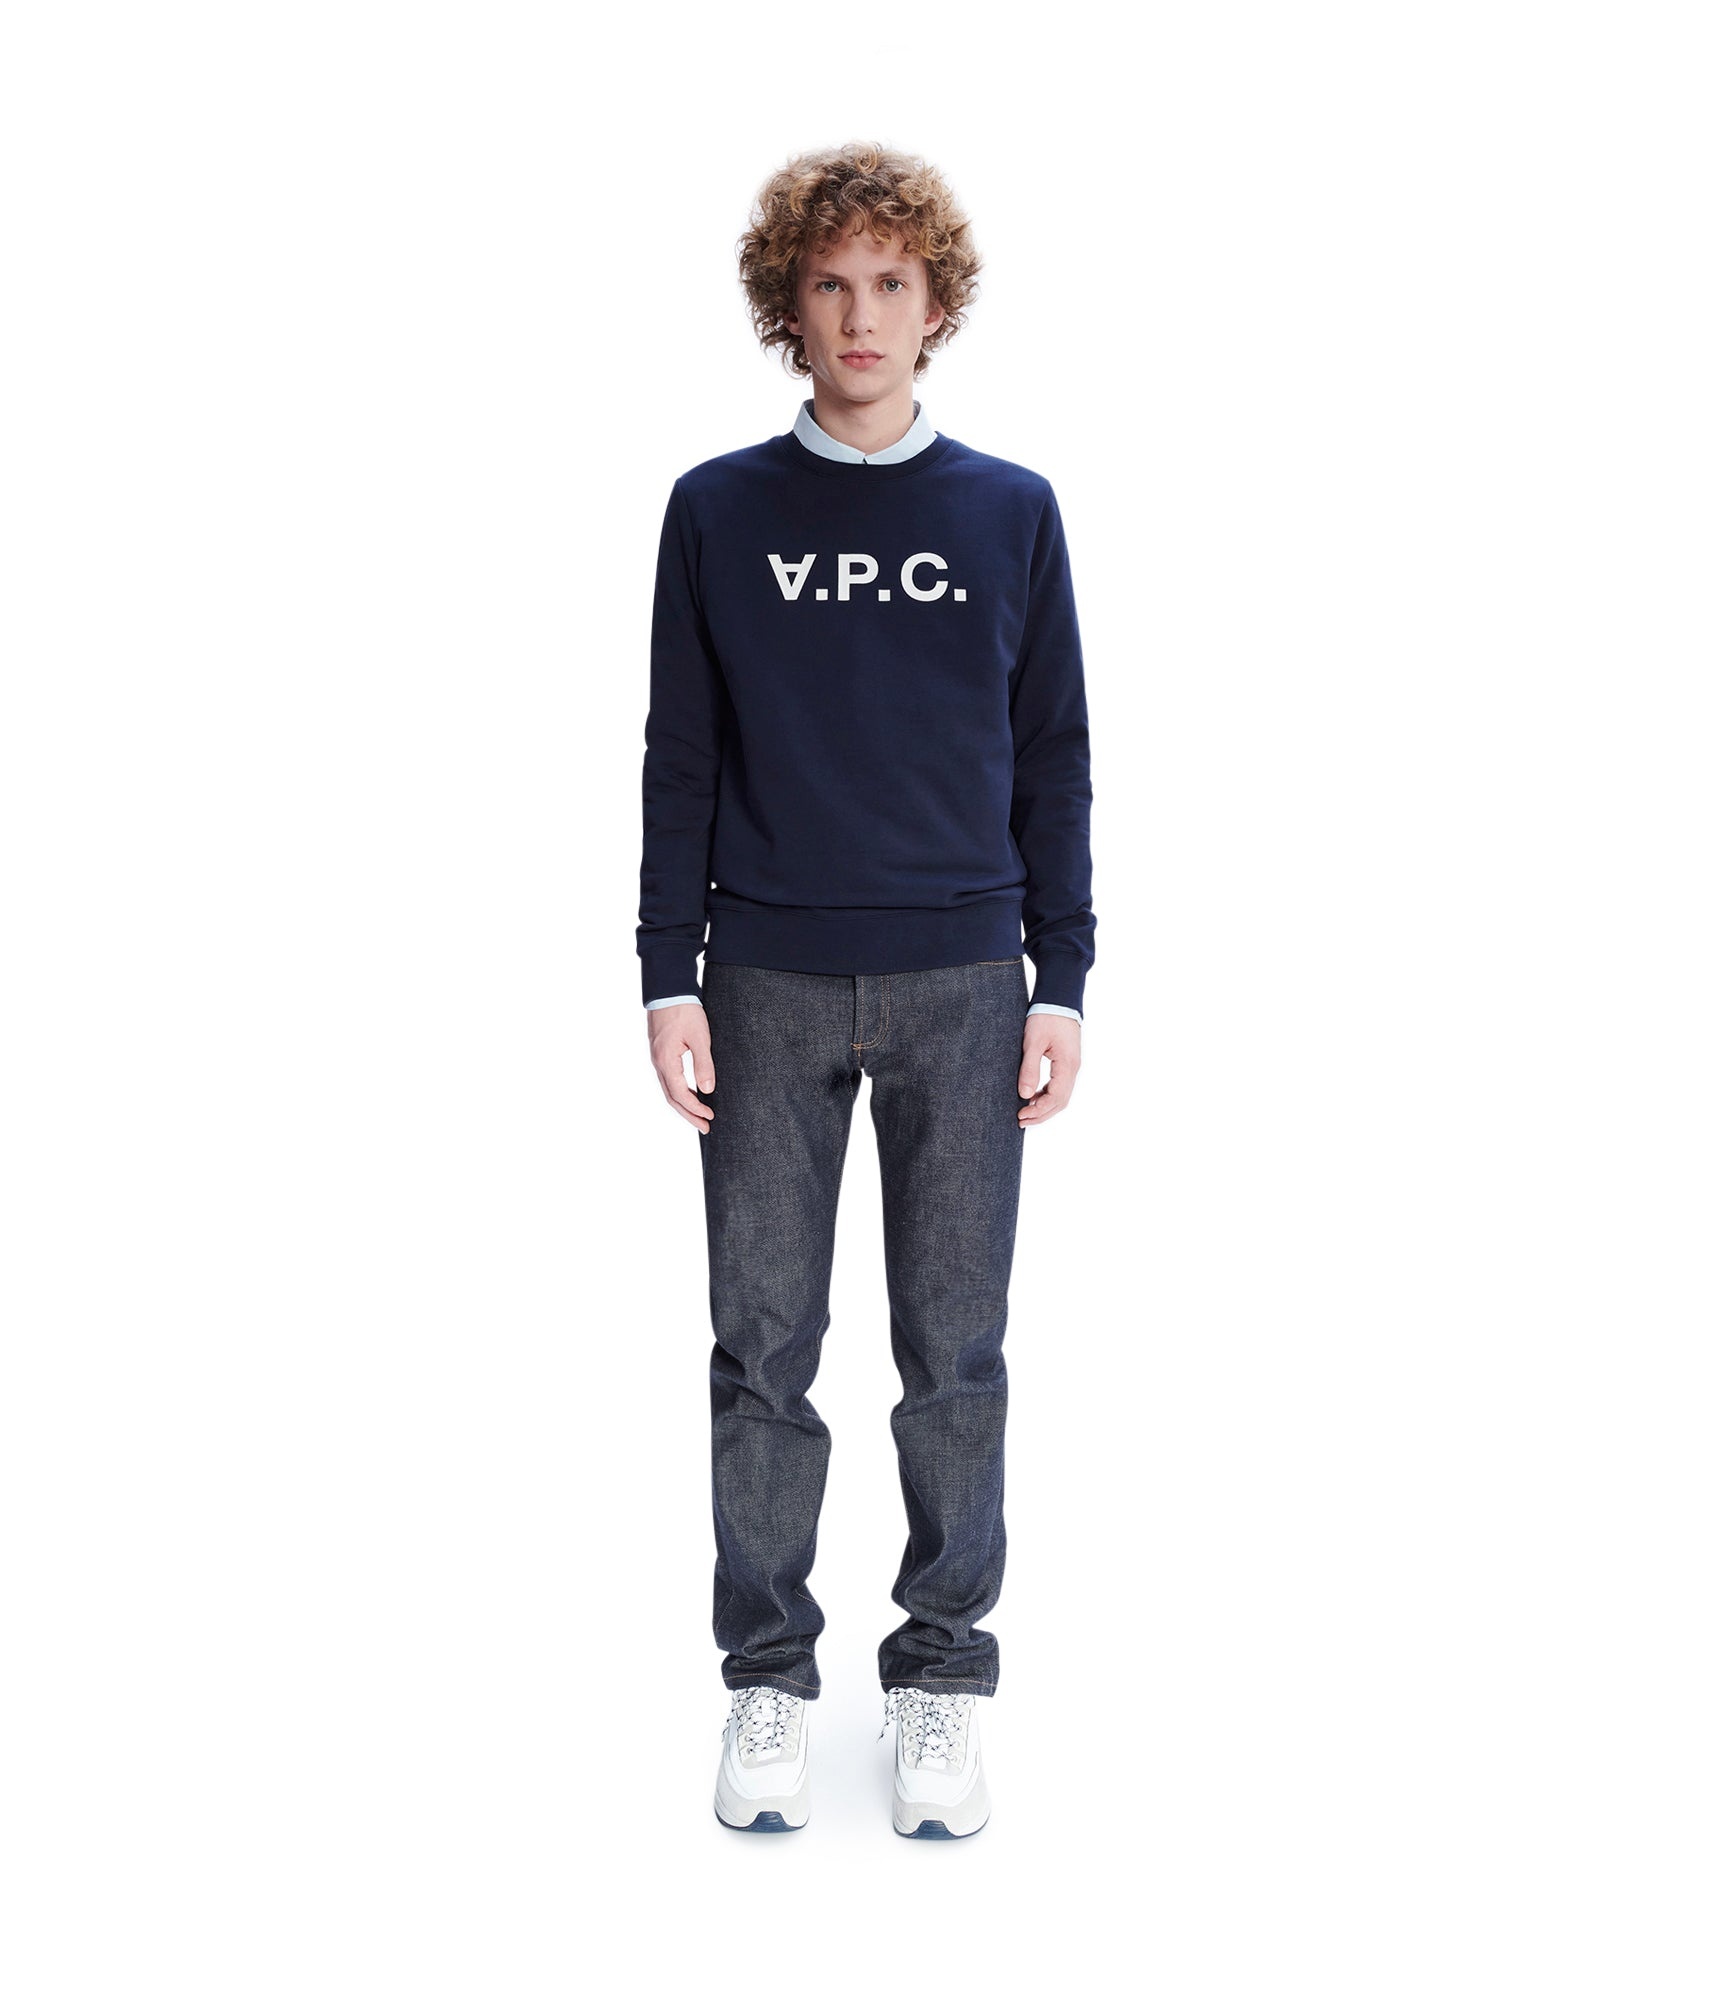 VPC sweatshirt - 2